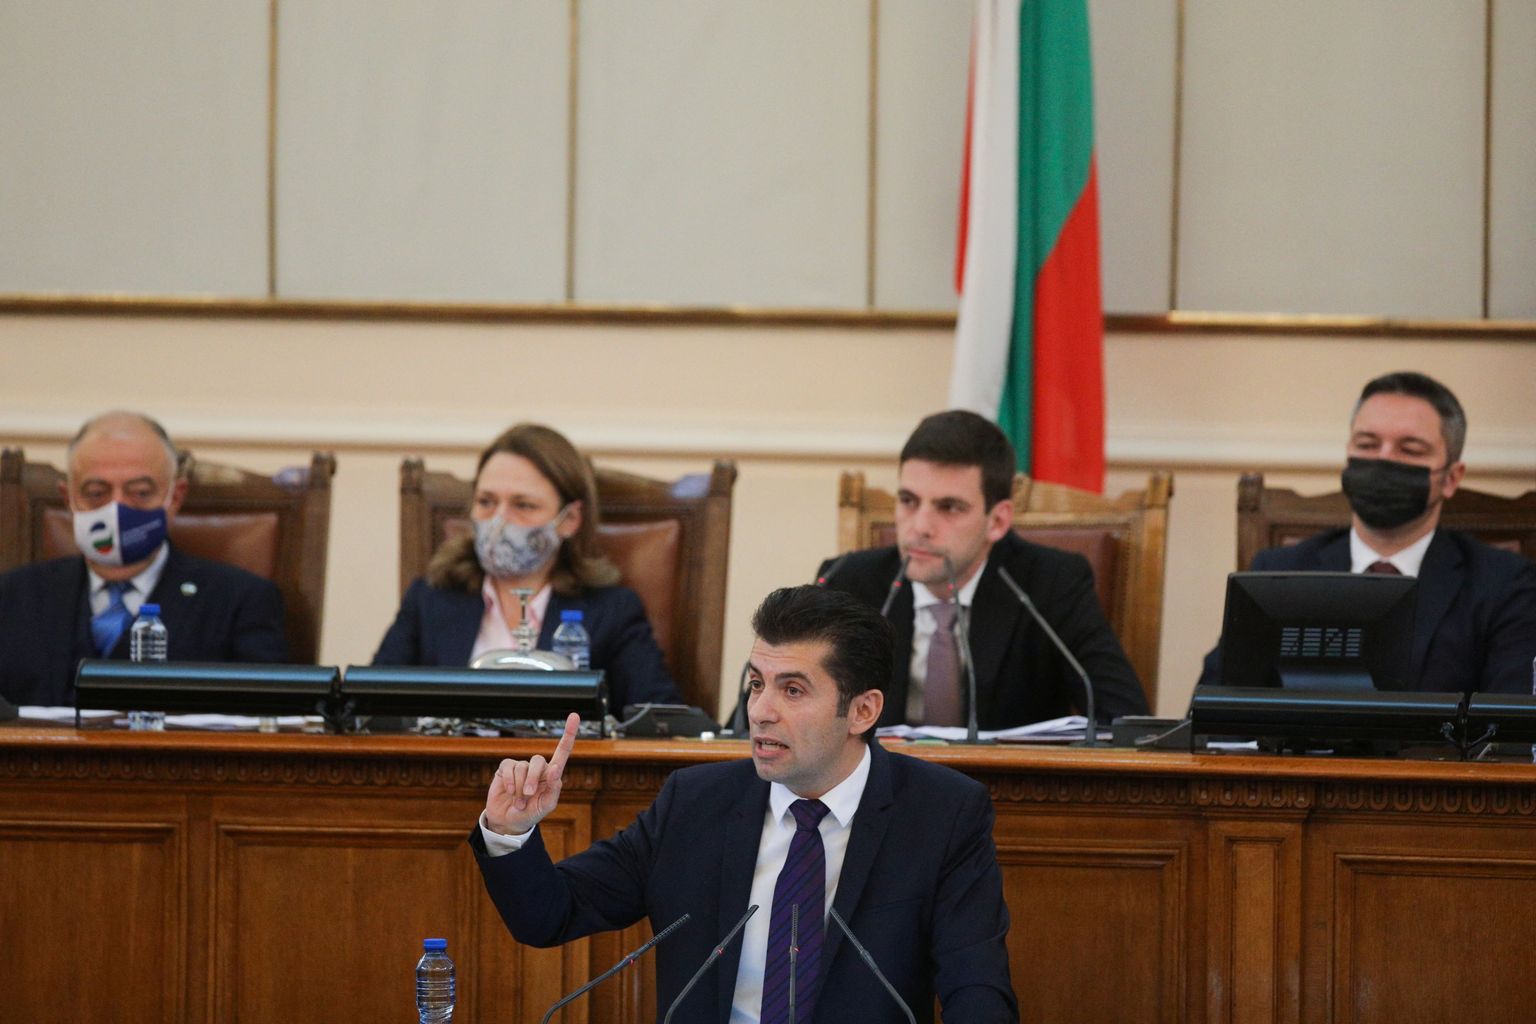 Bulgaaria peaminister Kiril Petkov esinemas parlamendis. Foto on illustratiivne.